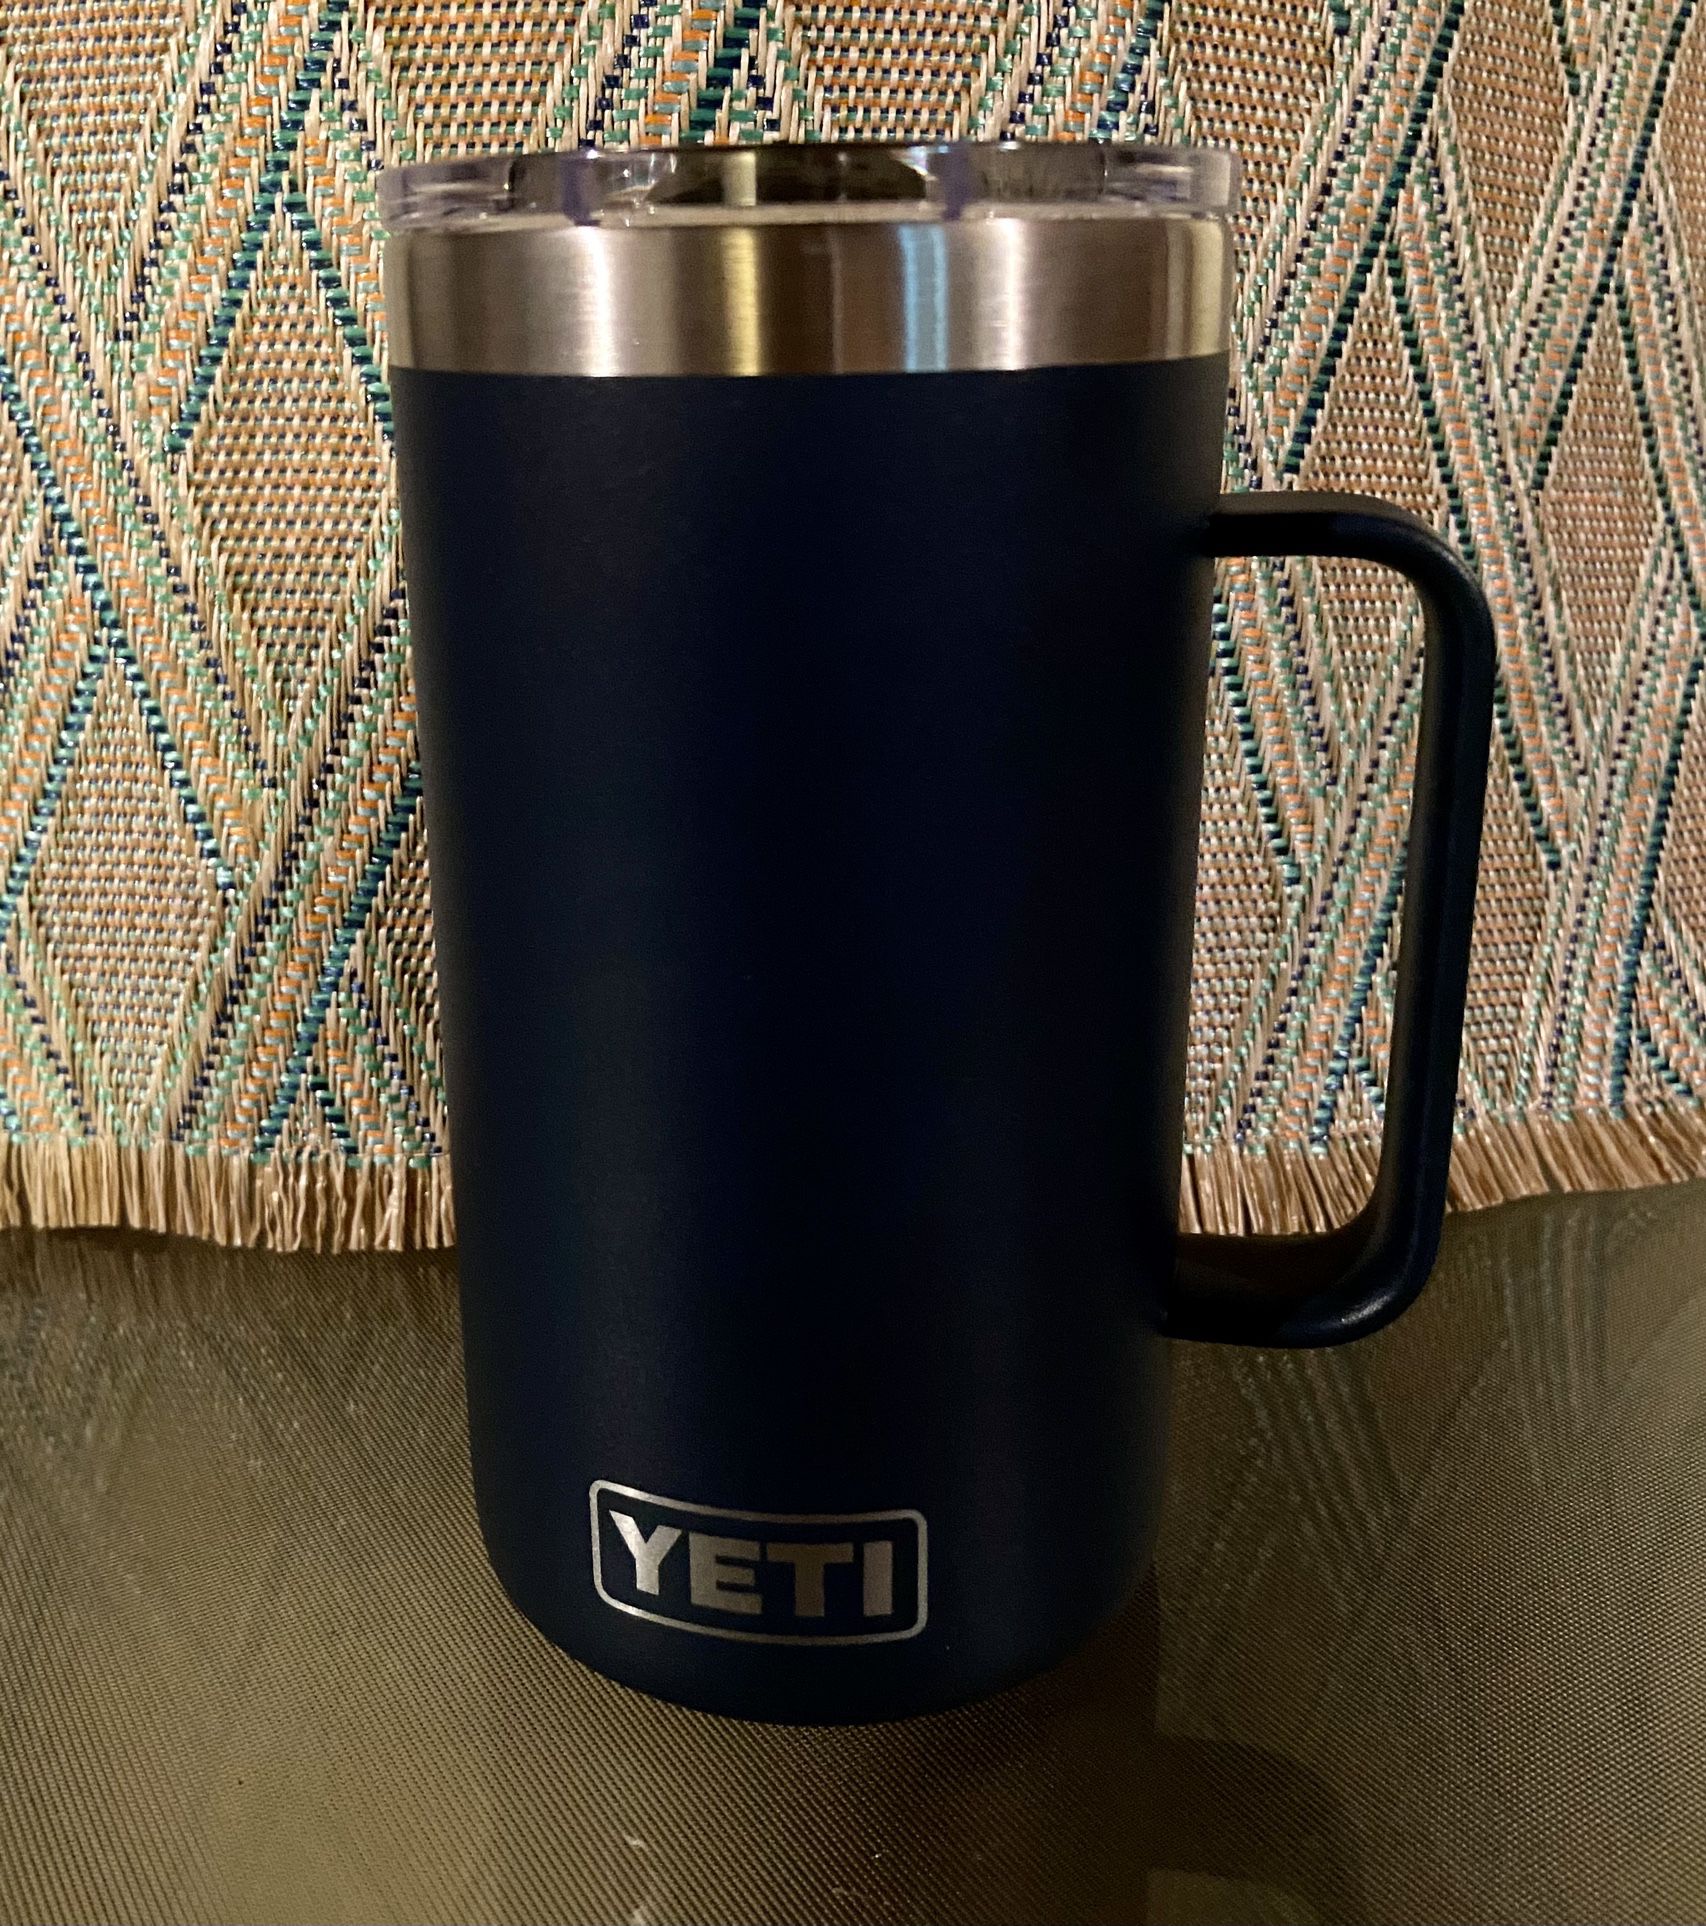 Yeti Beer Mug for Sale in Bloomfield Hills, MI - OfferUp